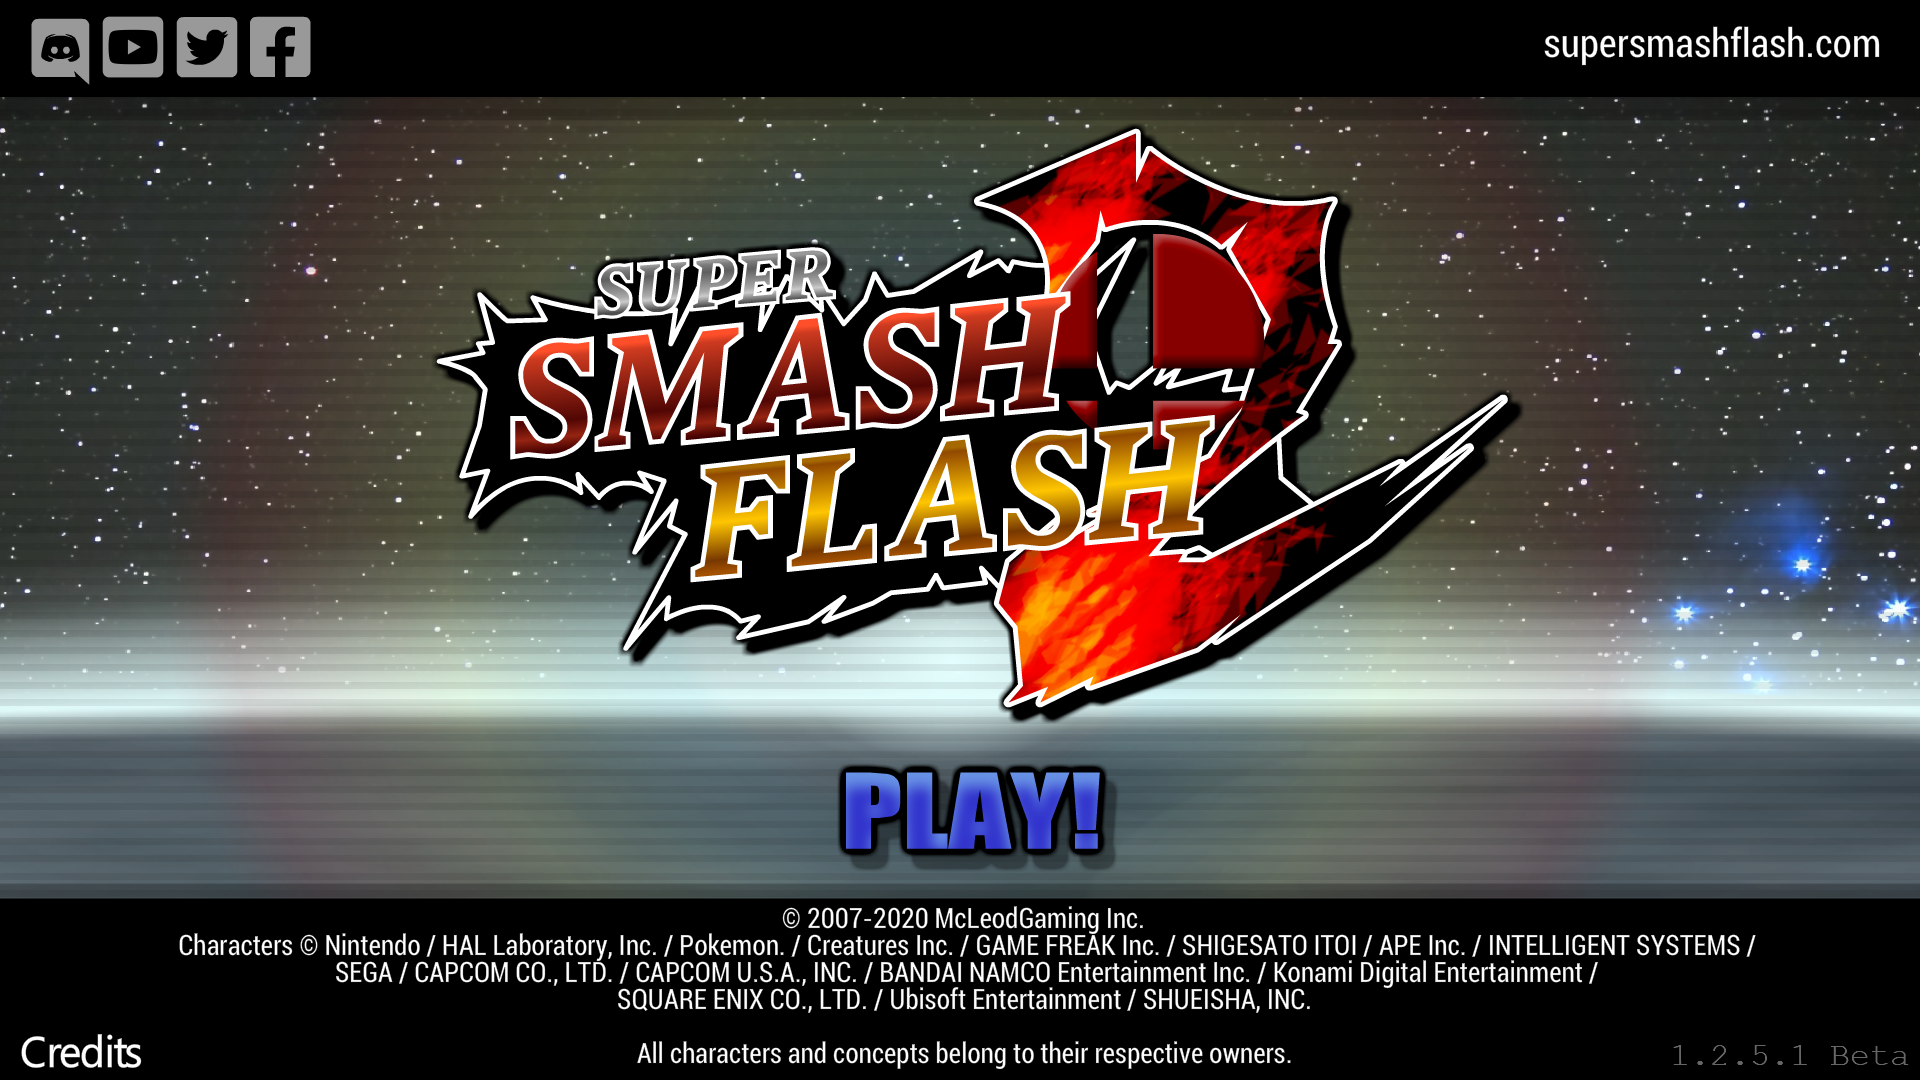 super smash flash 3 unblocked at school